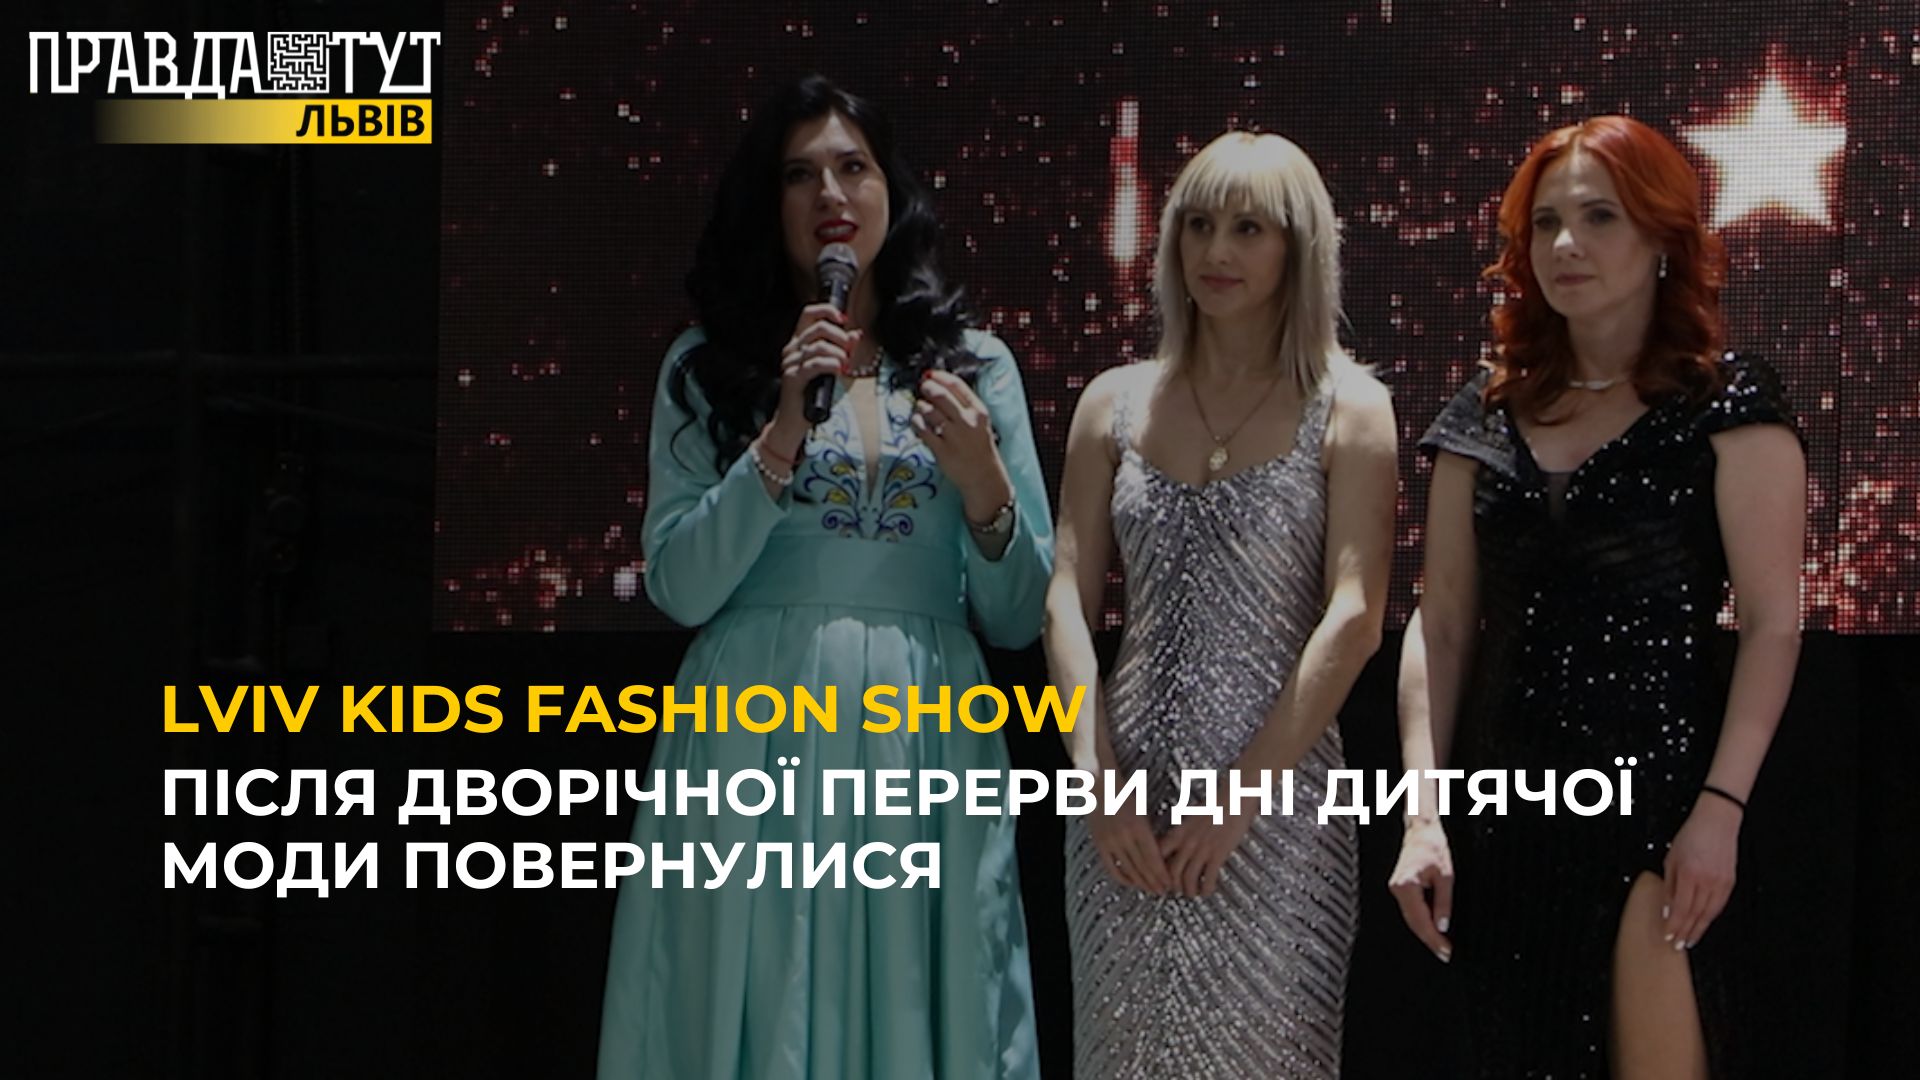 6 сезон Lviv Kids Fashion Show